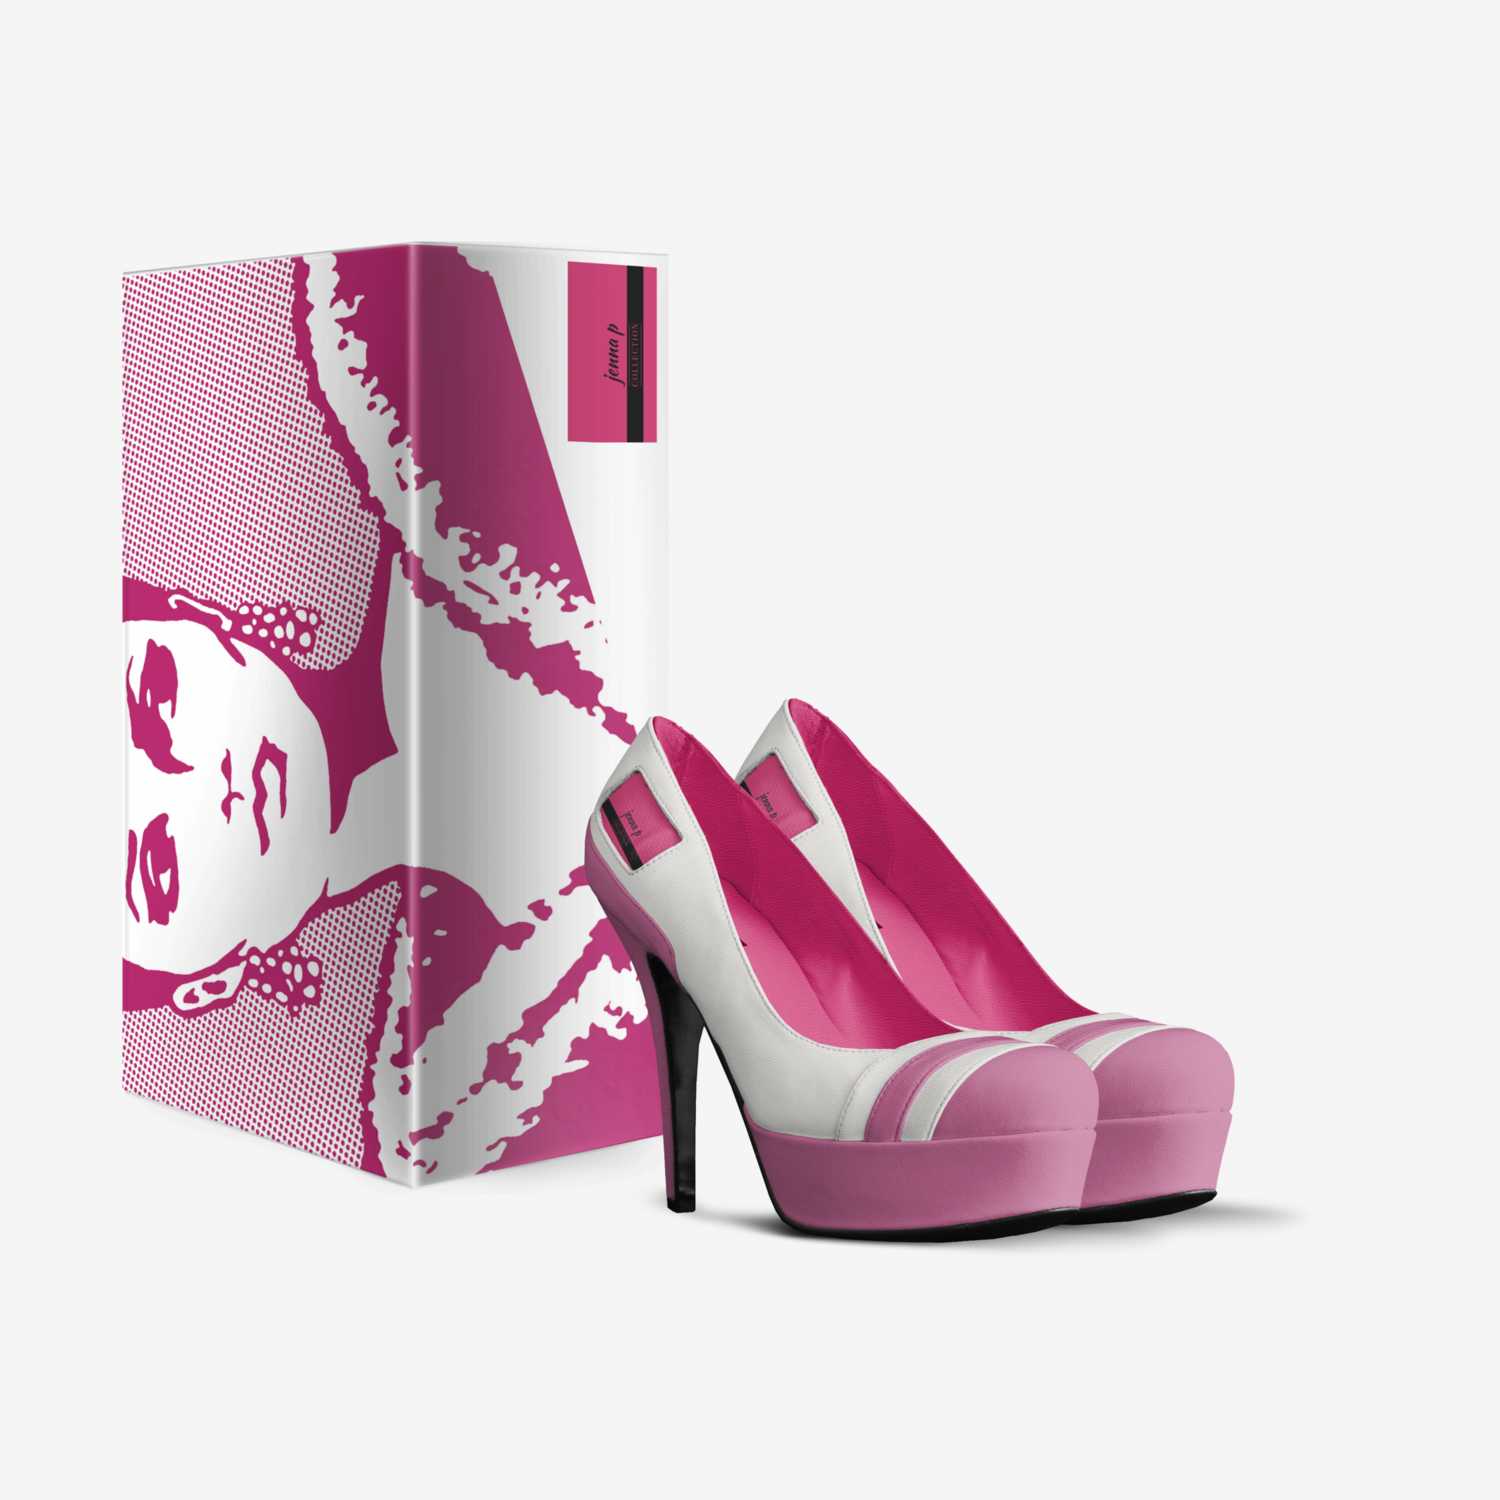 jenna p custom made in Italy shoes by Jenna Powell | Box view